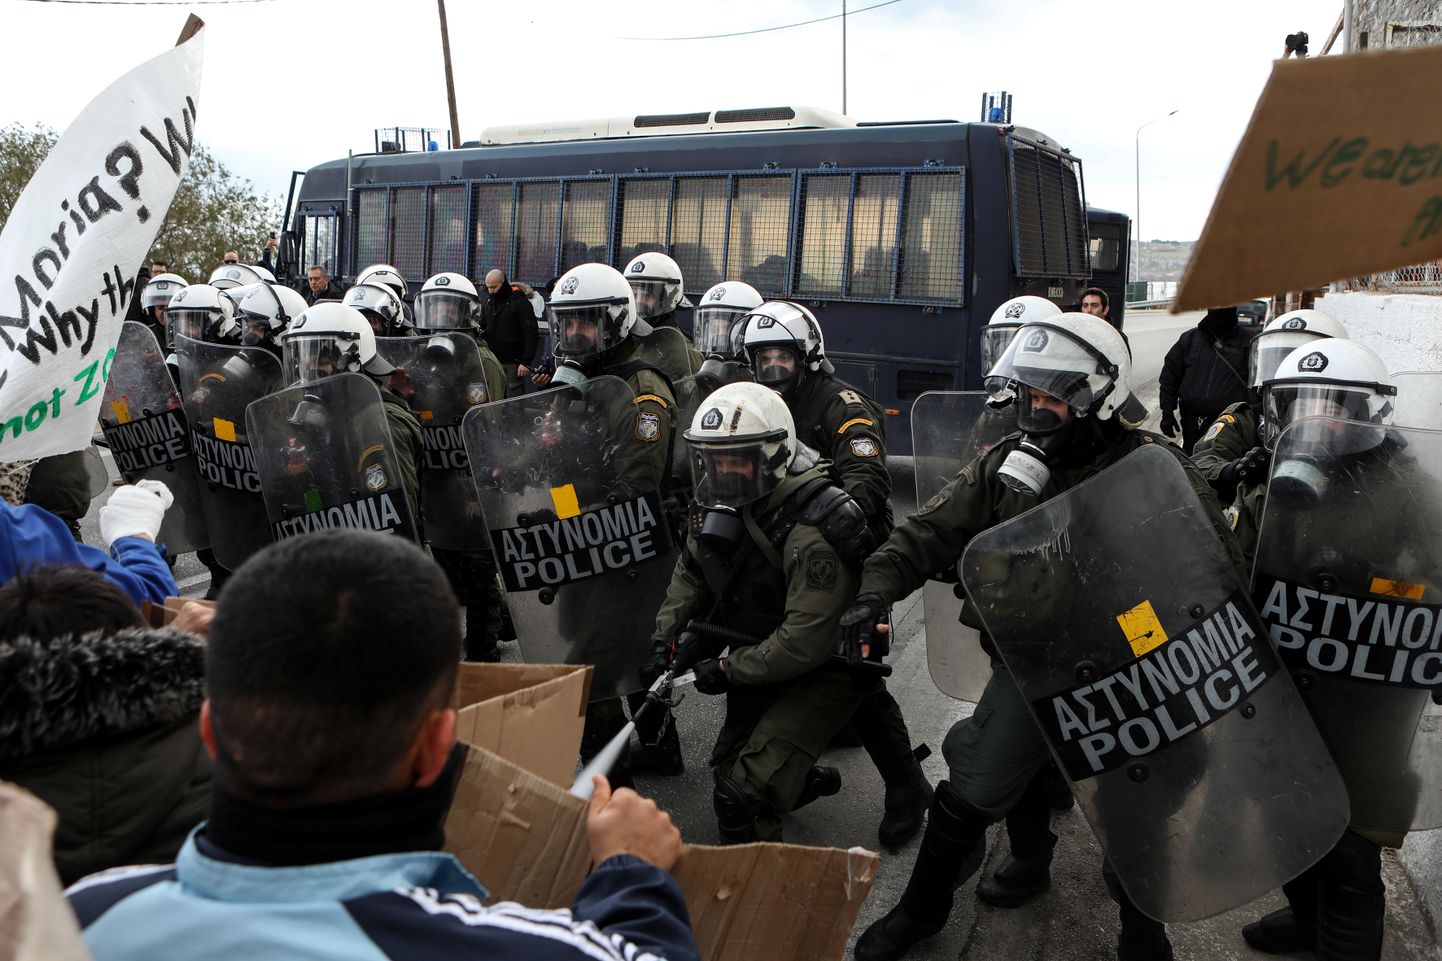 Kreeka politsei silmitsi protestivate migrantidega.